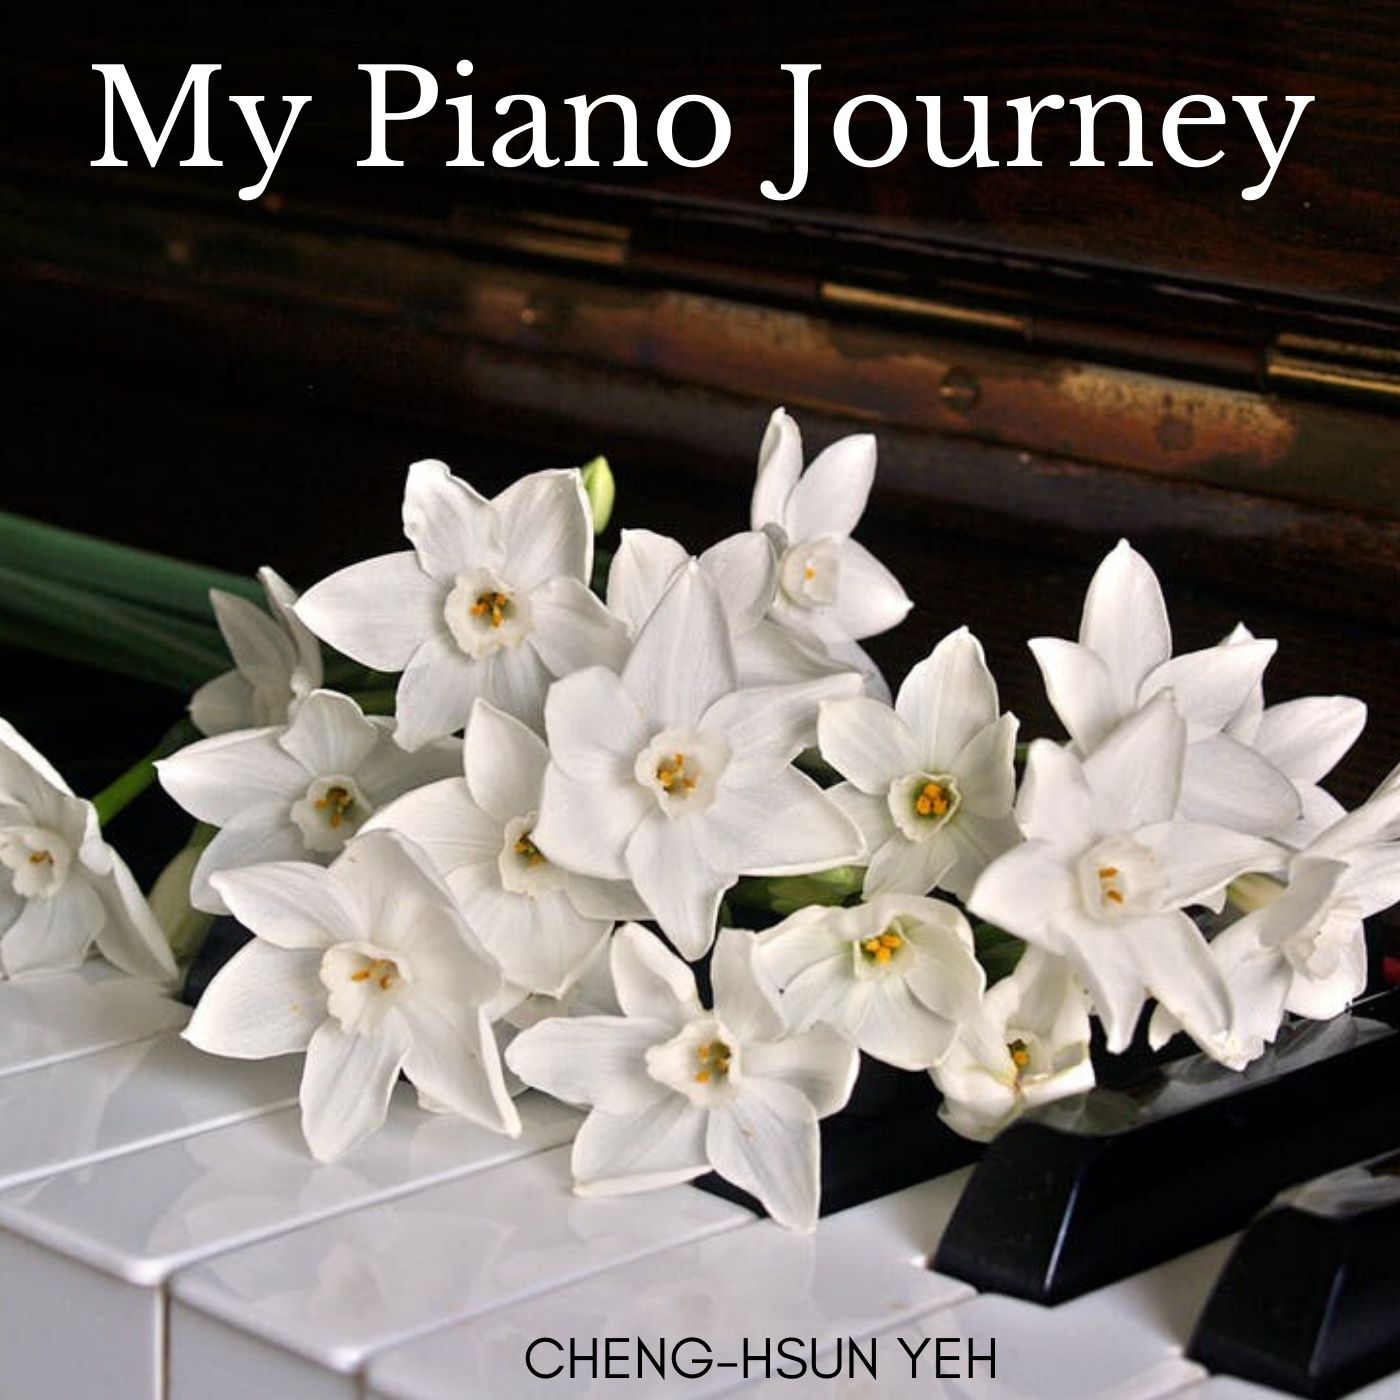 My Piano Journey